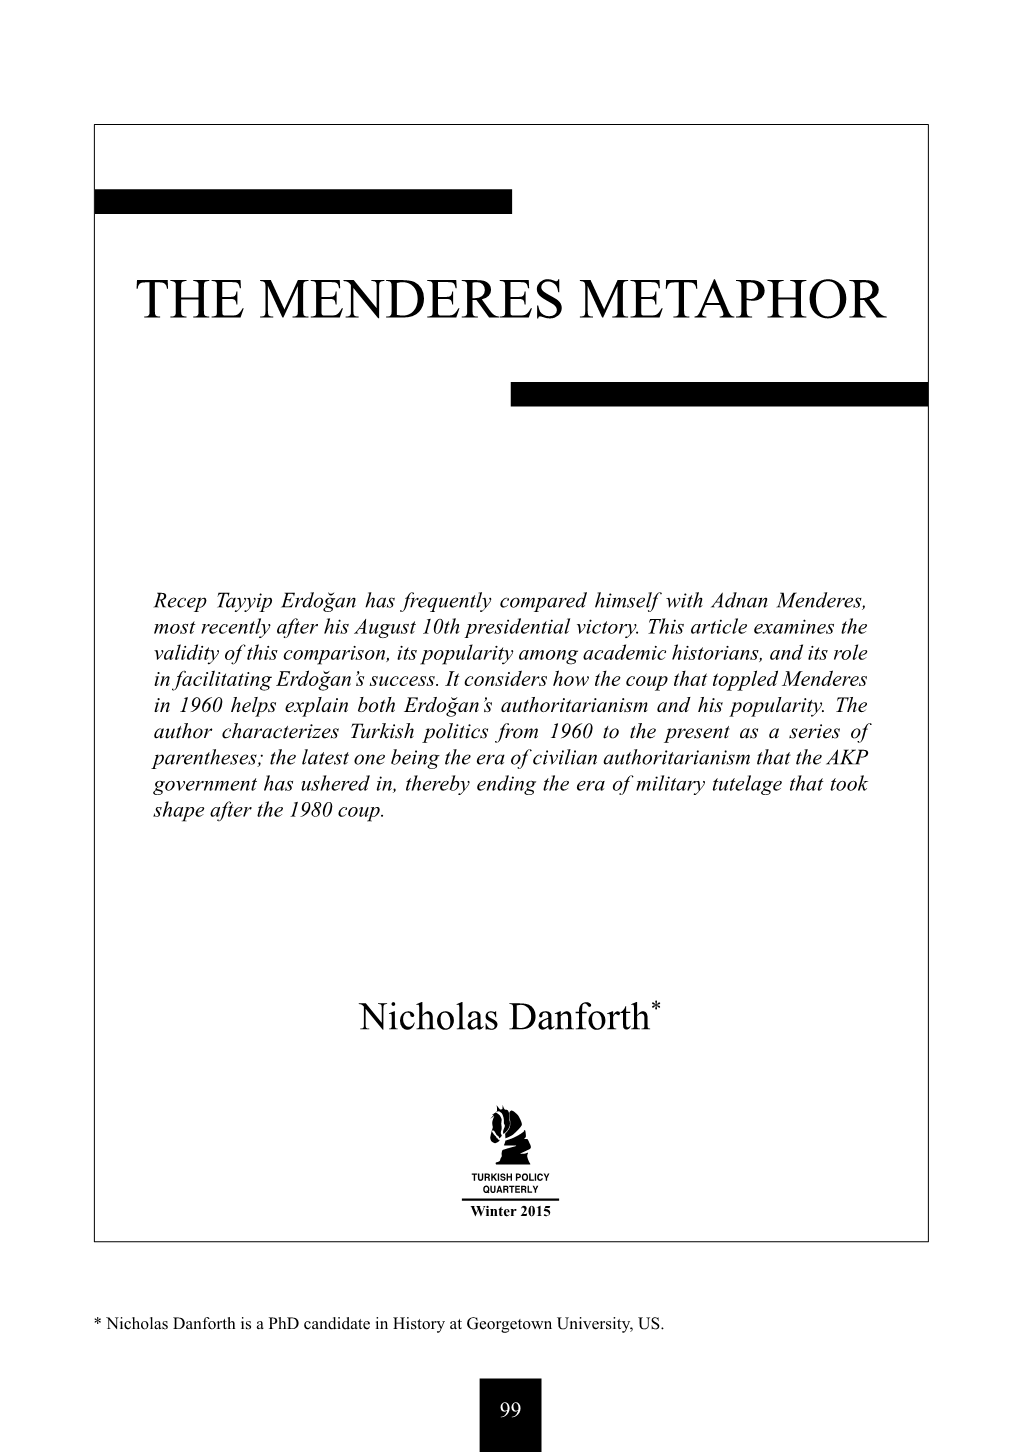 The Menderes Metaphor